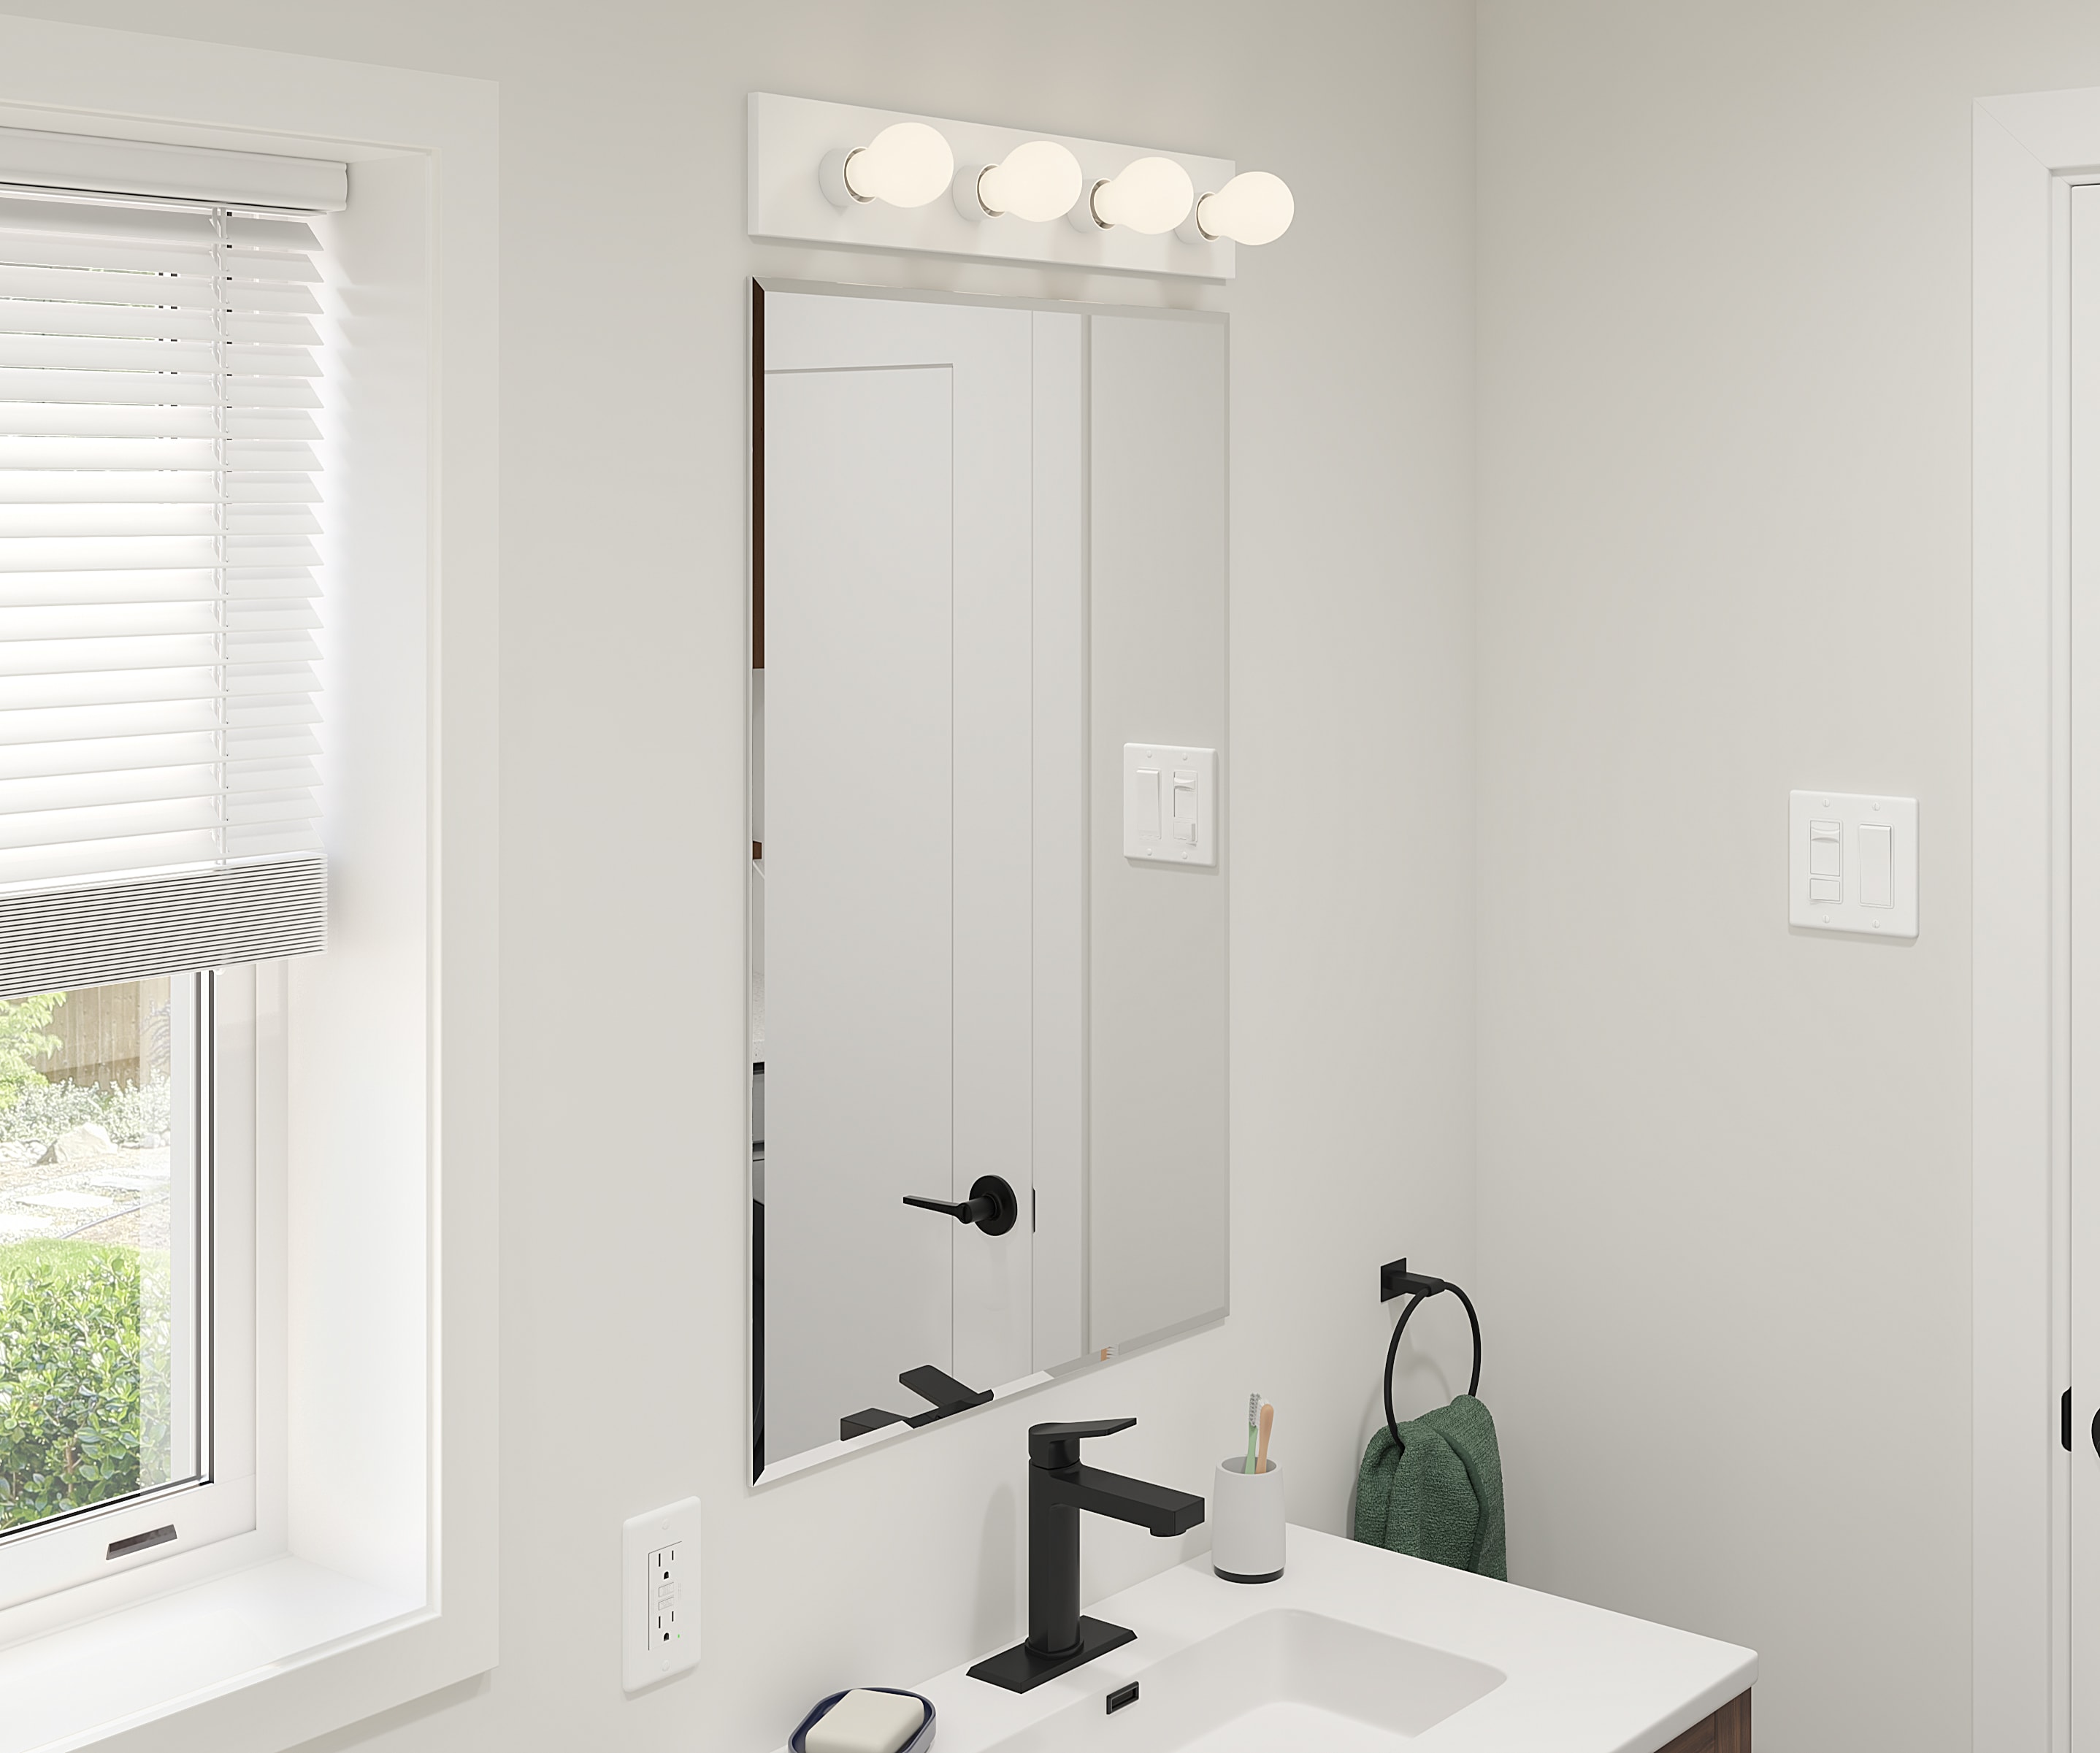 Bathroom mirror with a 4-light vanity bar